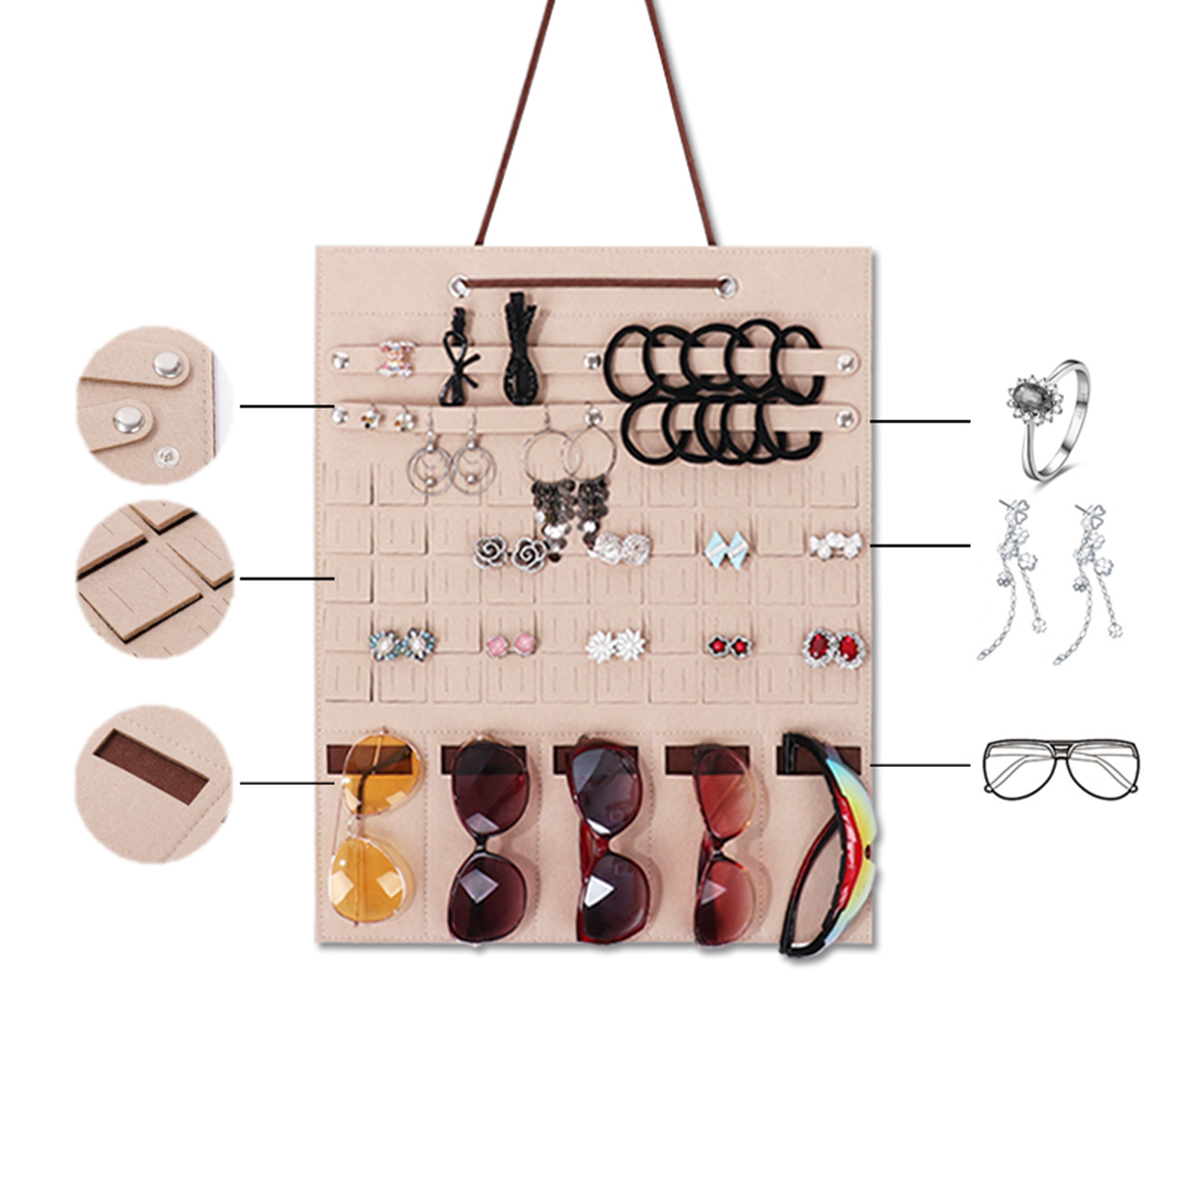 Slots Felt Sunglasses Jewelry Wall Hanging Bag Organizer Storage Pocket Display